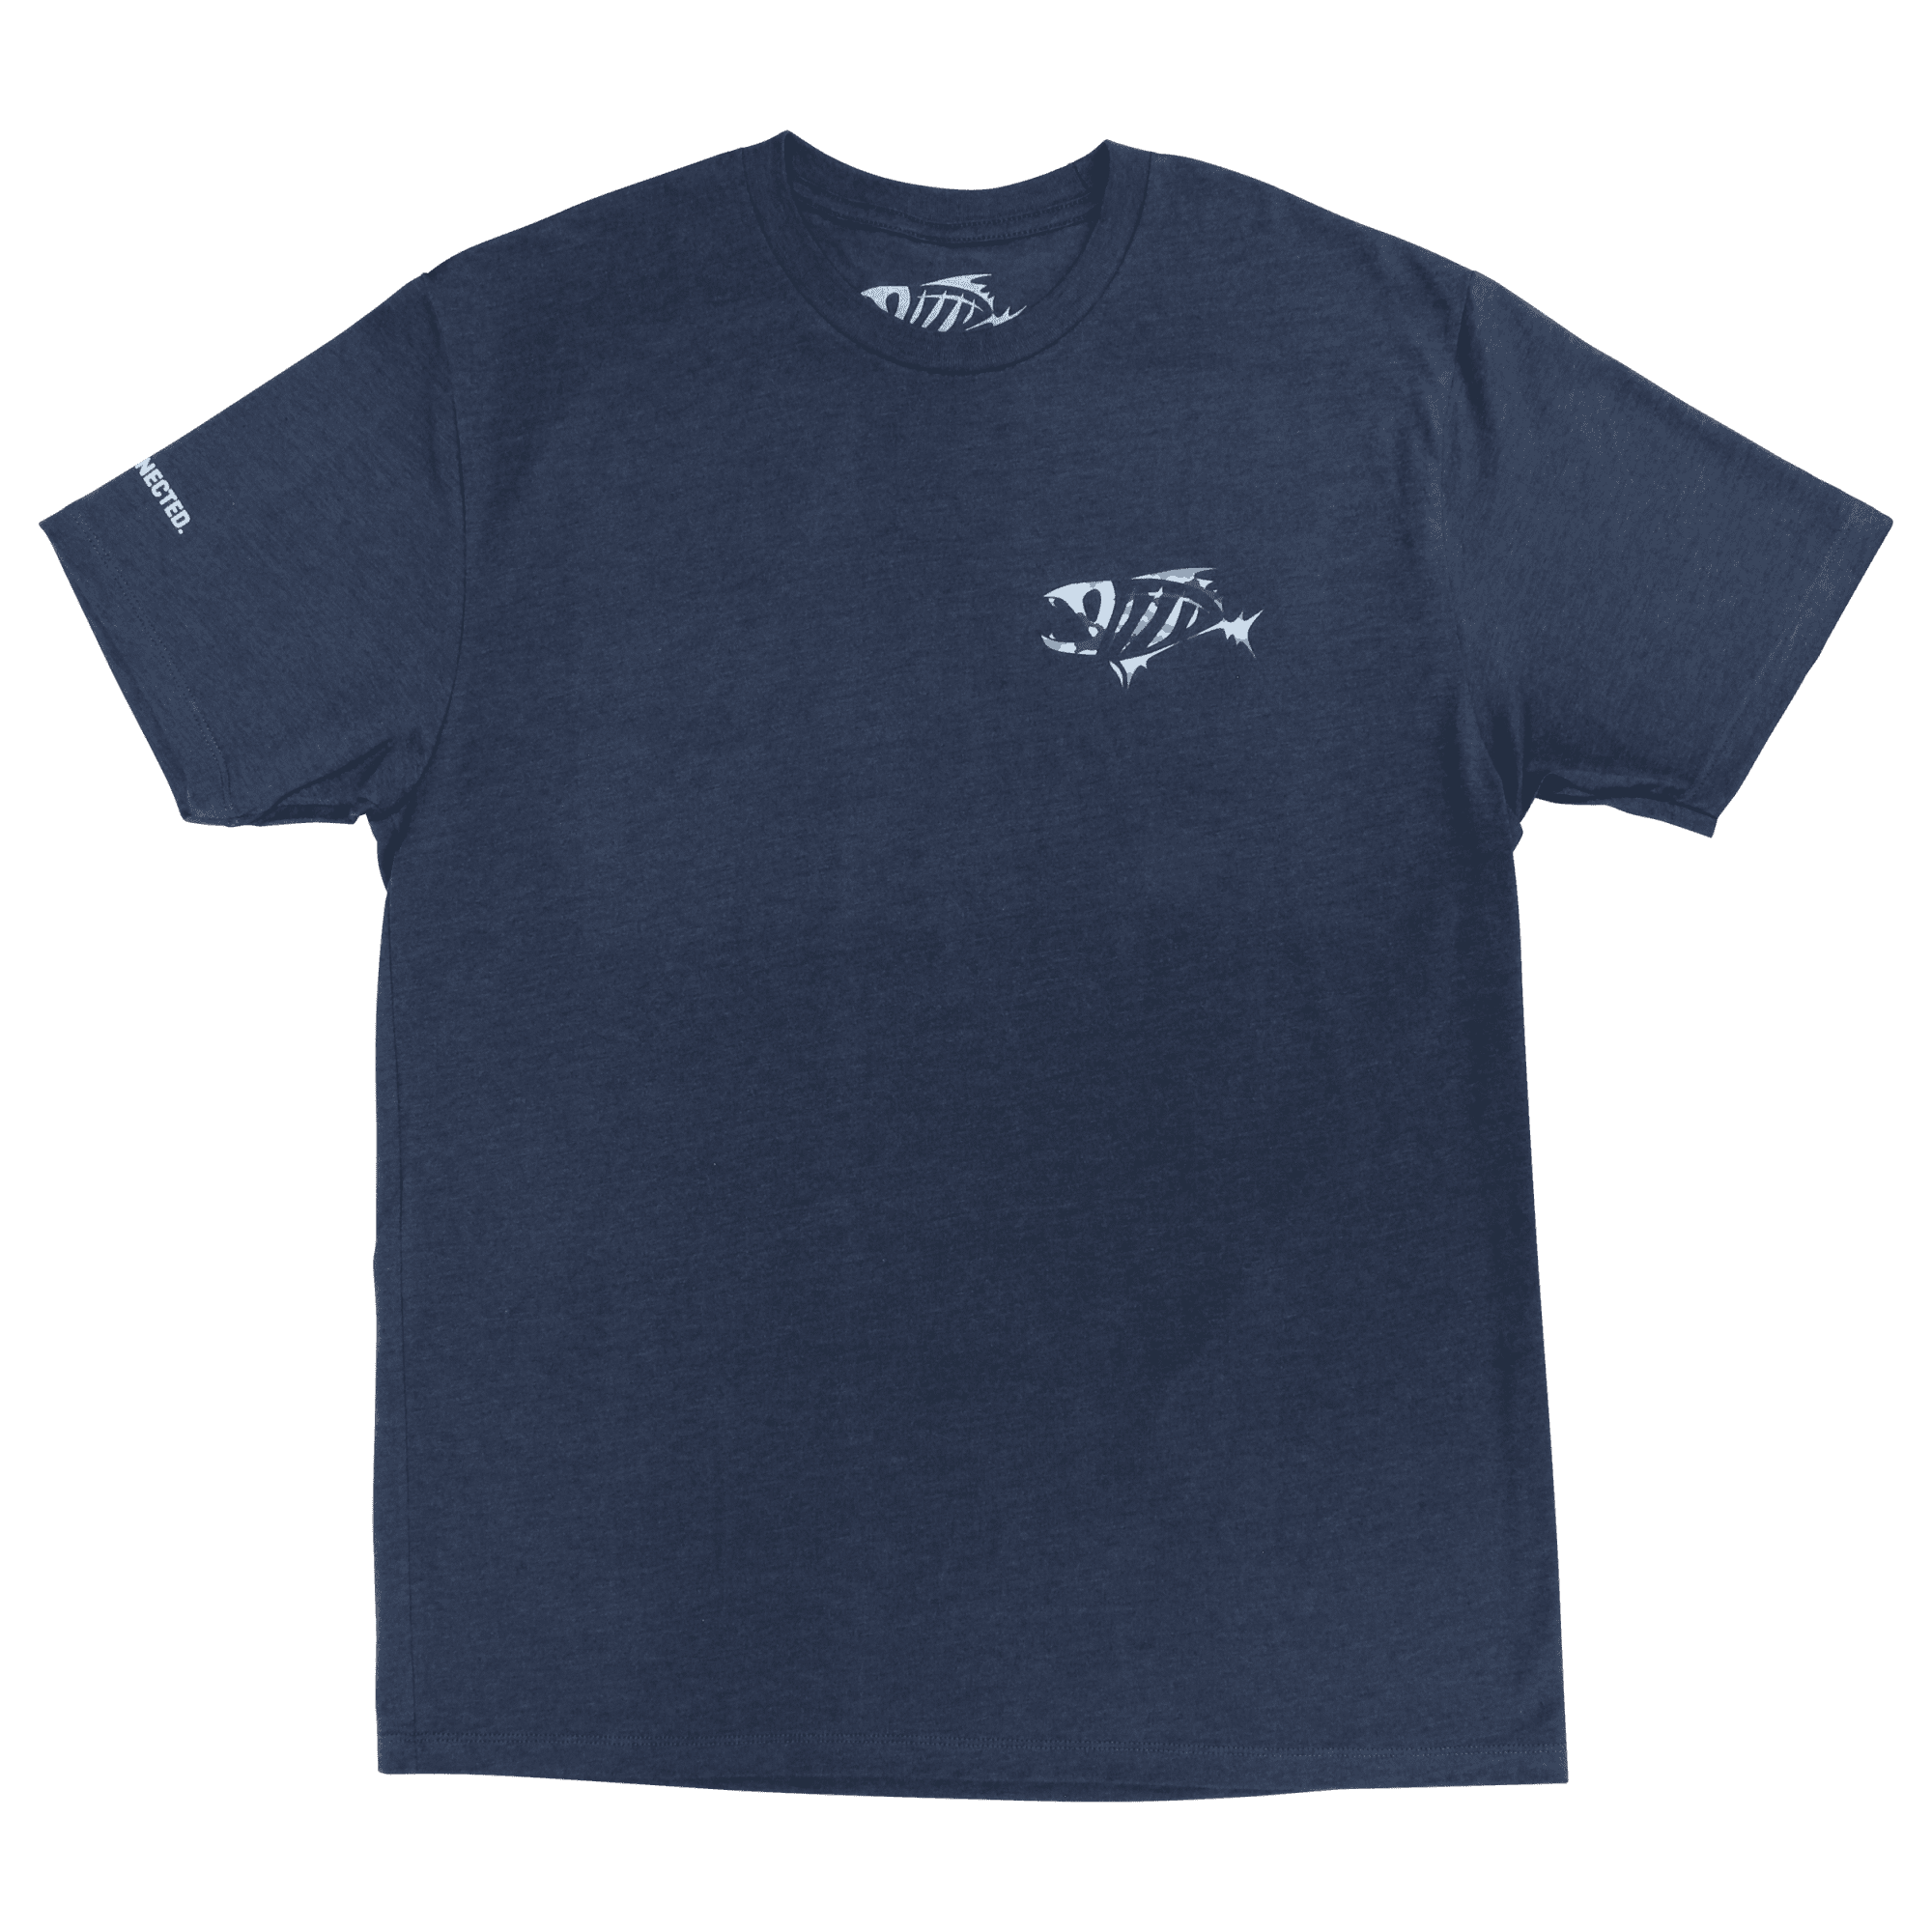 G Loomis Long Sleeve Cotton T-Shirt - Black - S